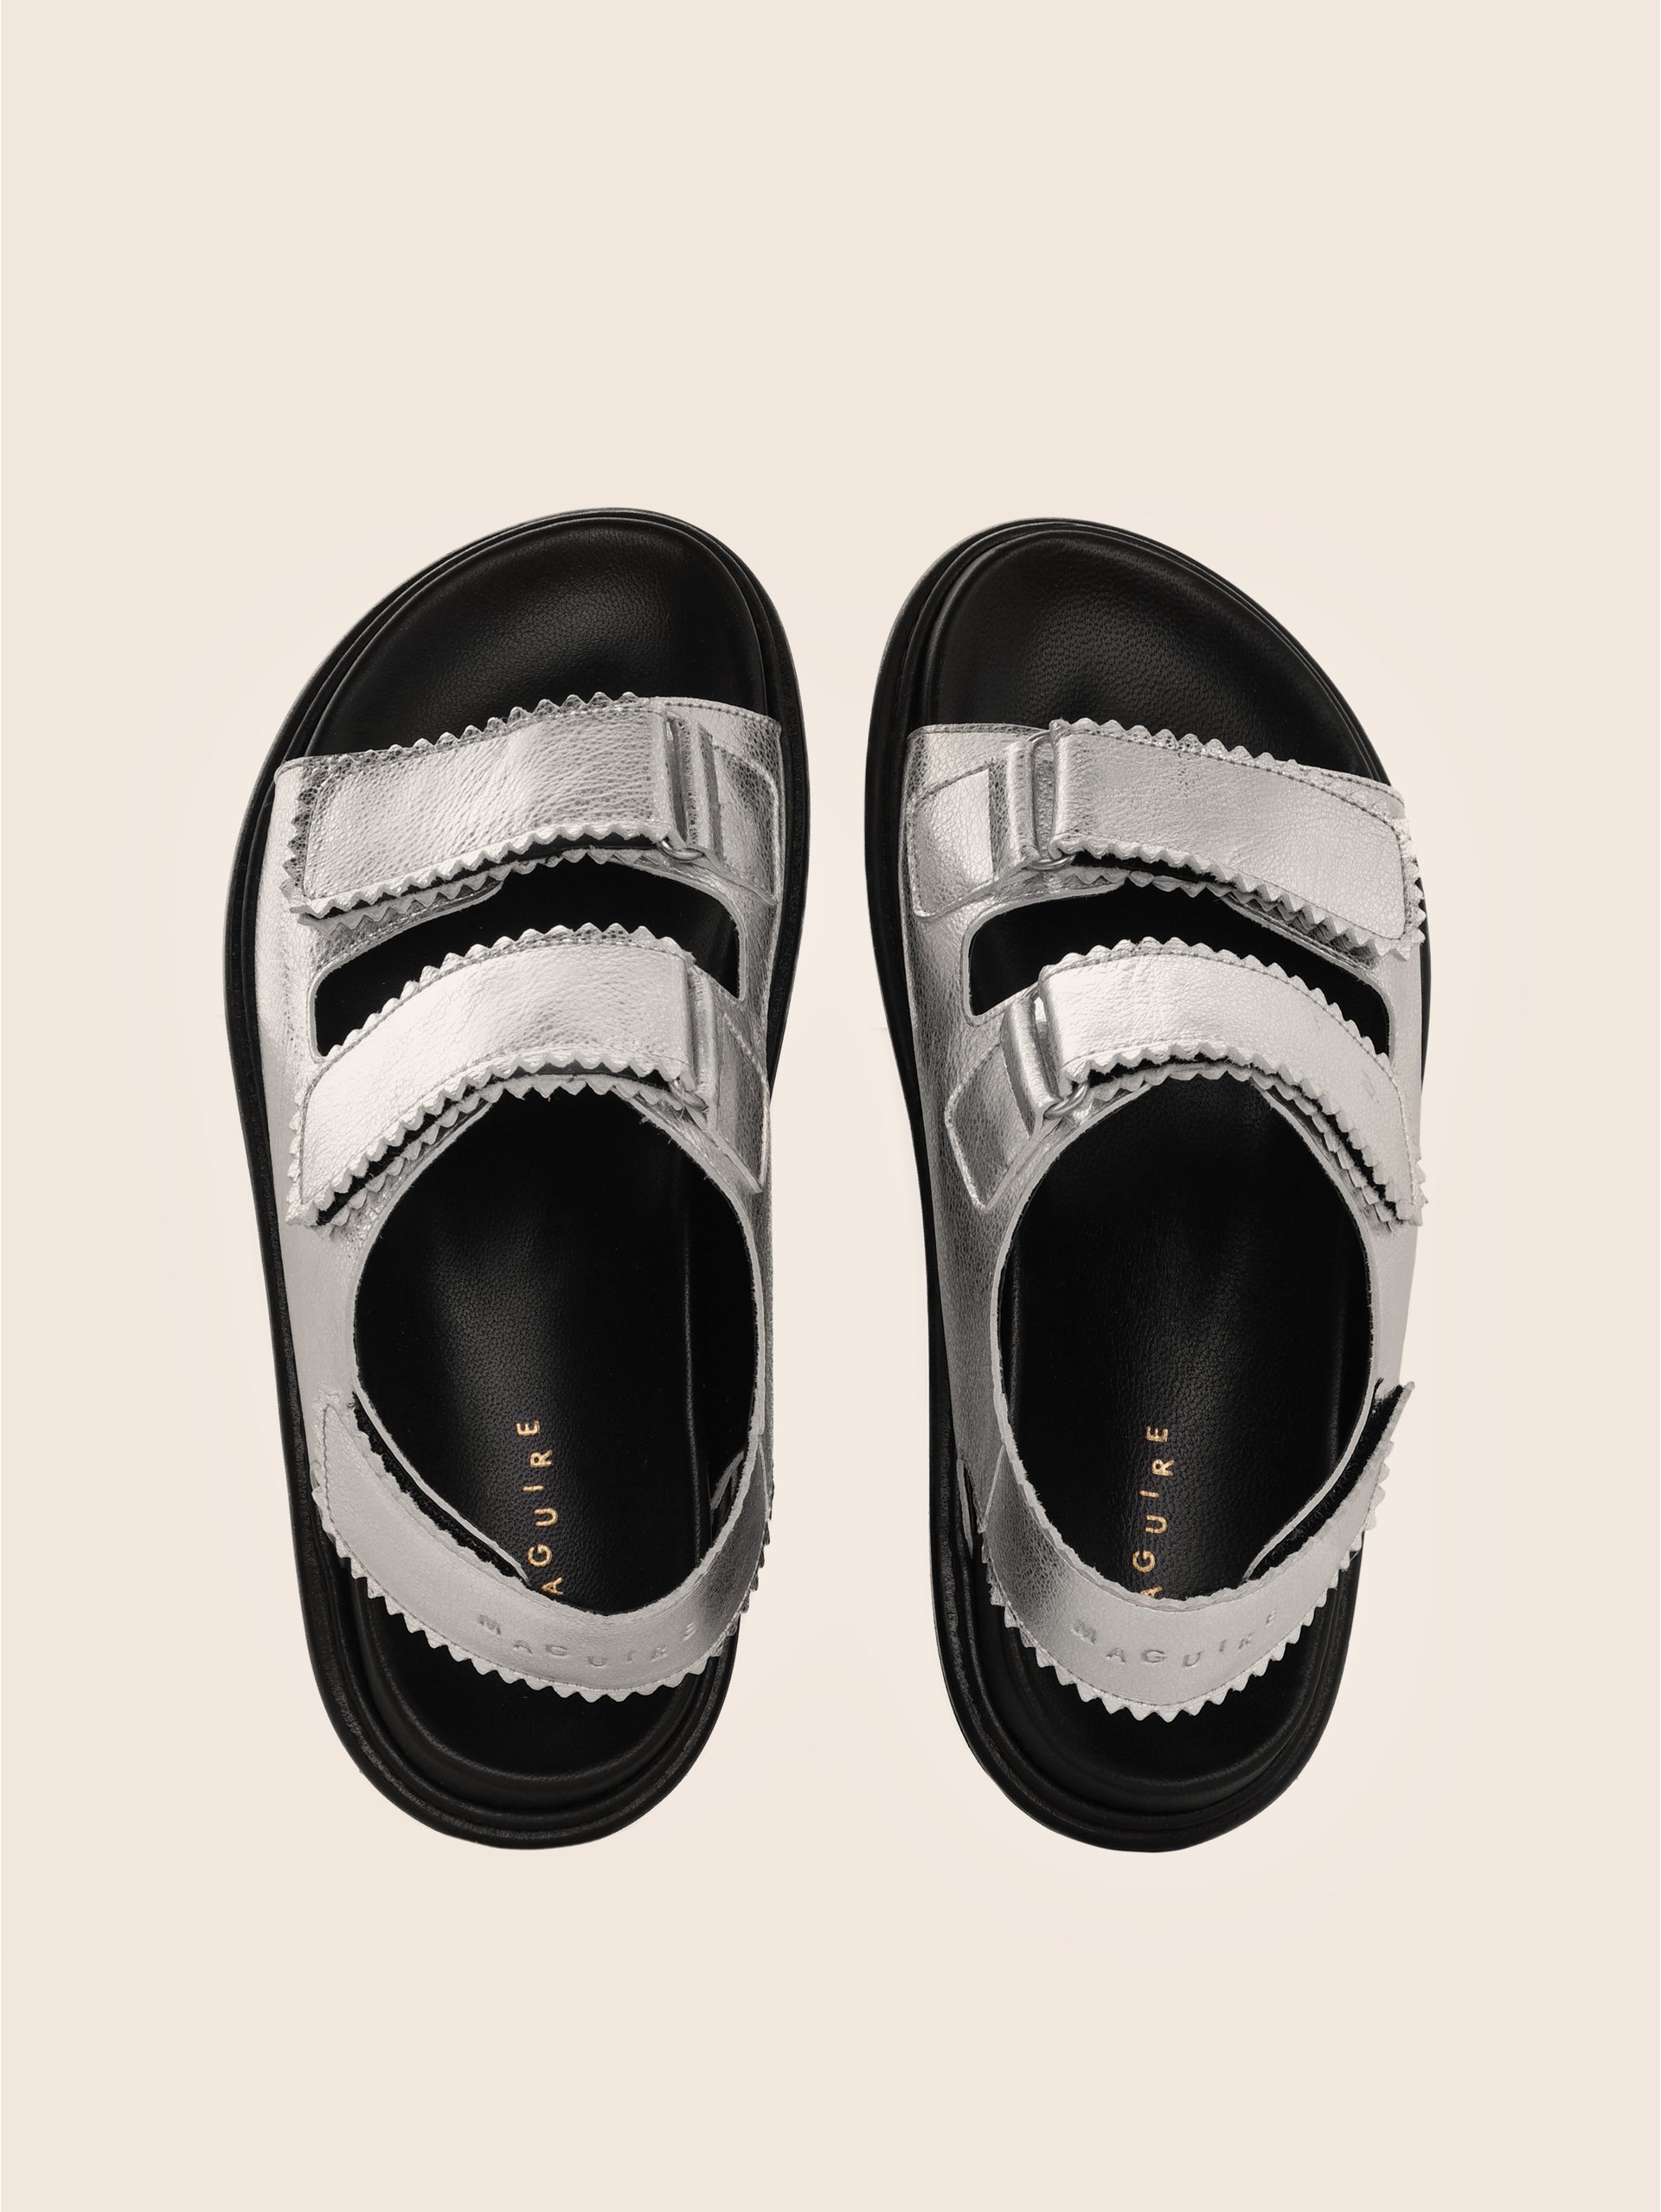 Tavira Silver Sandal